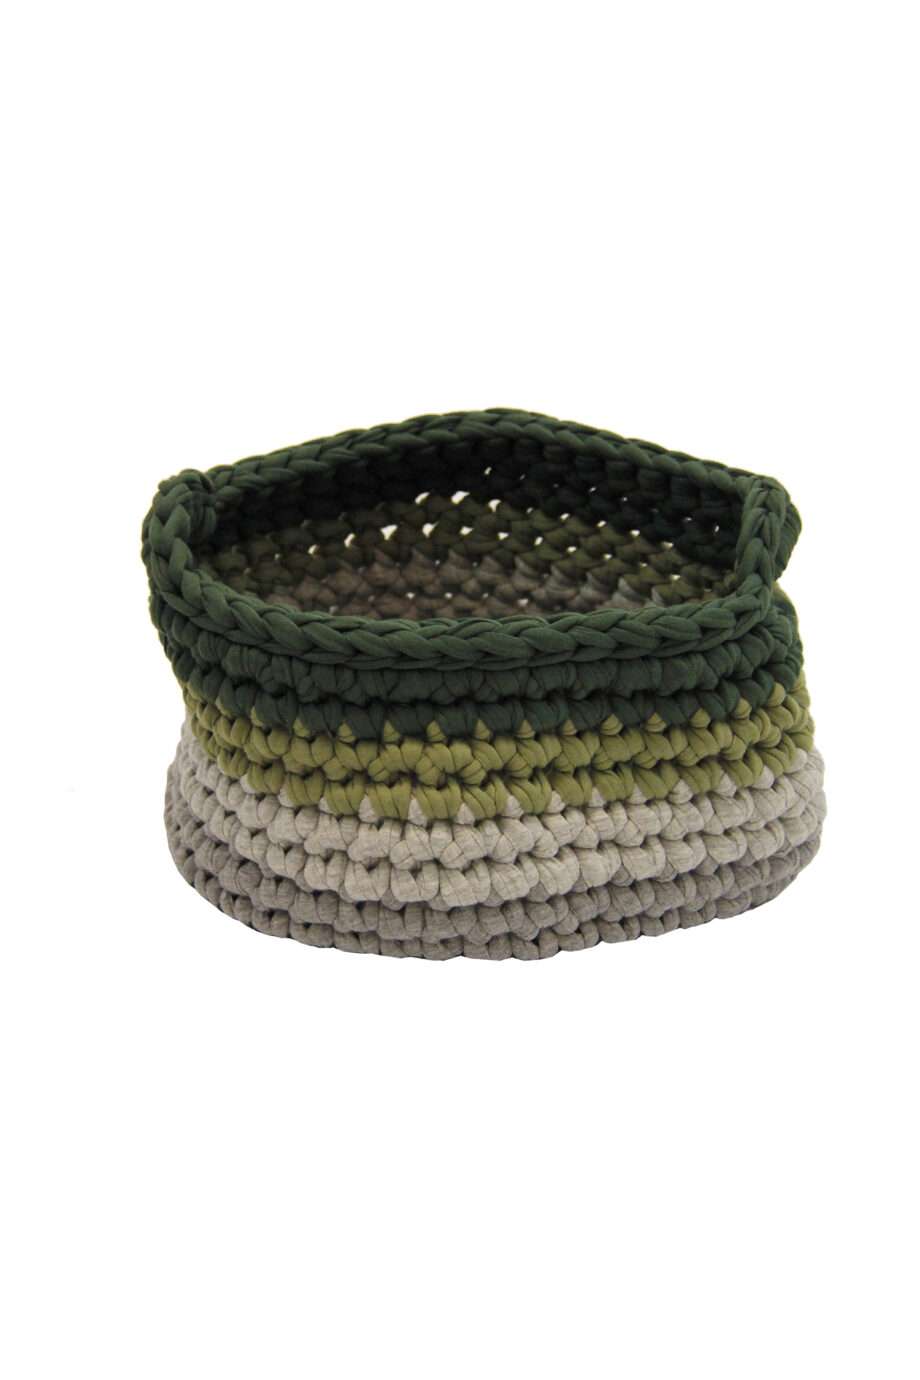 groovy olive green crochet cotton basket xsmall